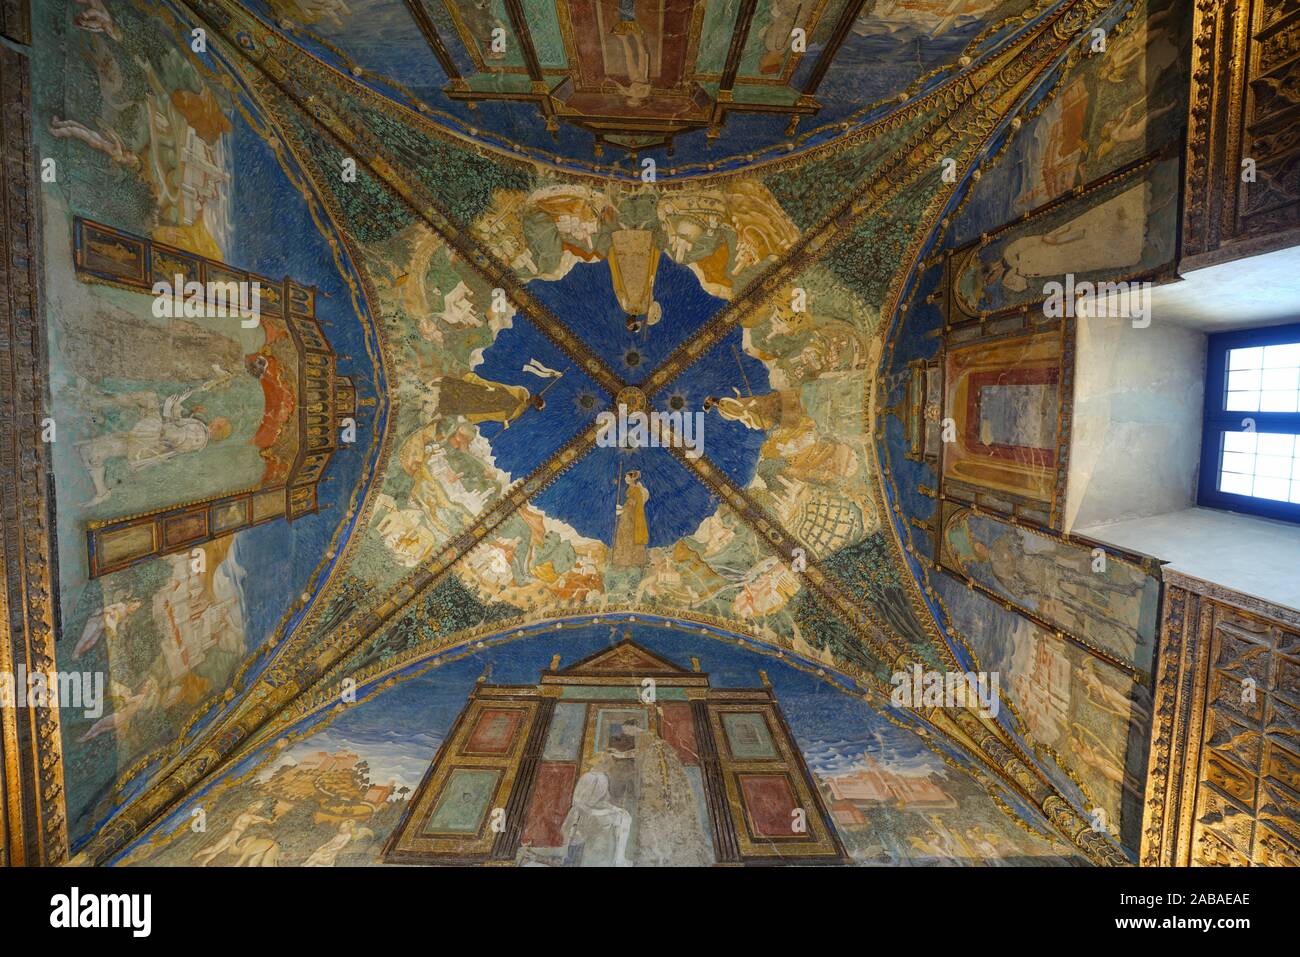 Frescoes of the vault of Gold room of Torrechiara Castle, Langhirano, Parma, Italy, Europe Stock Photo